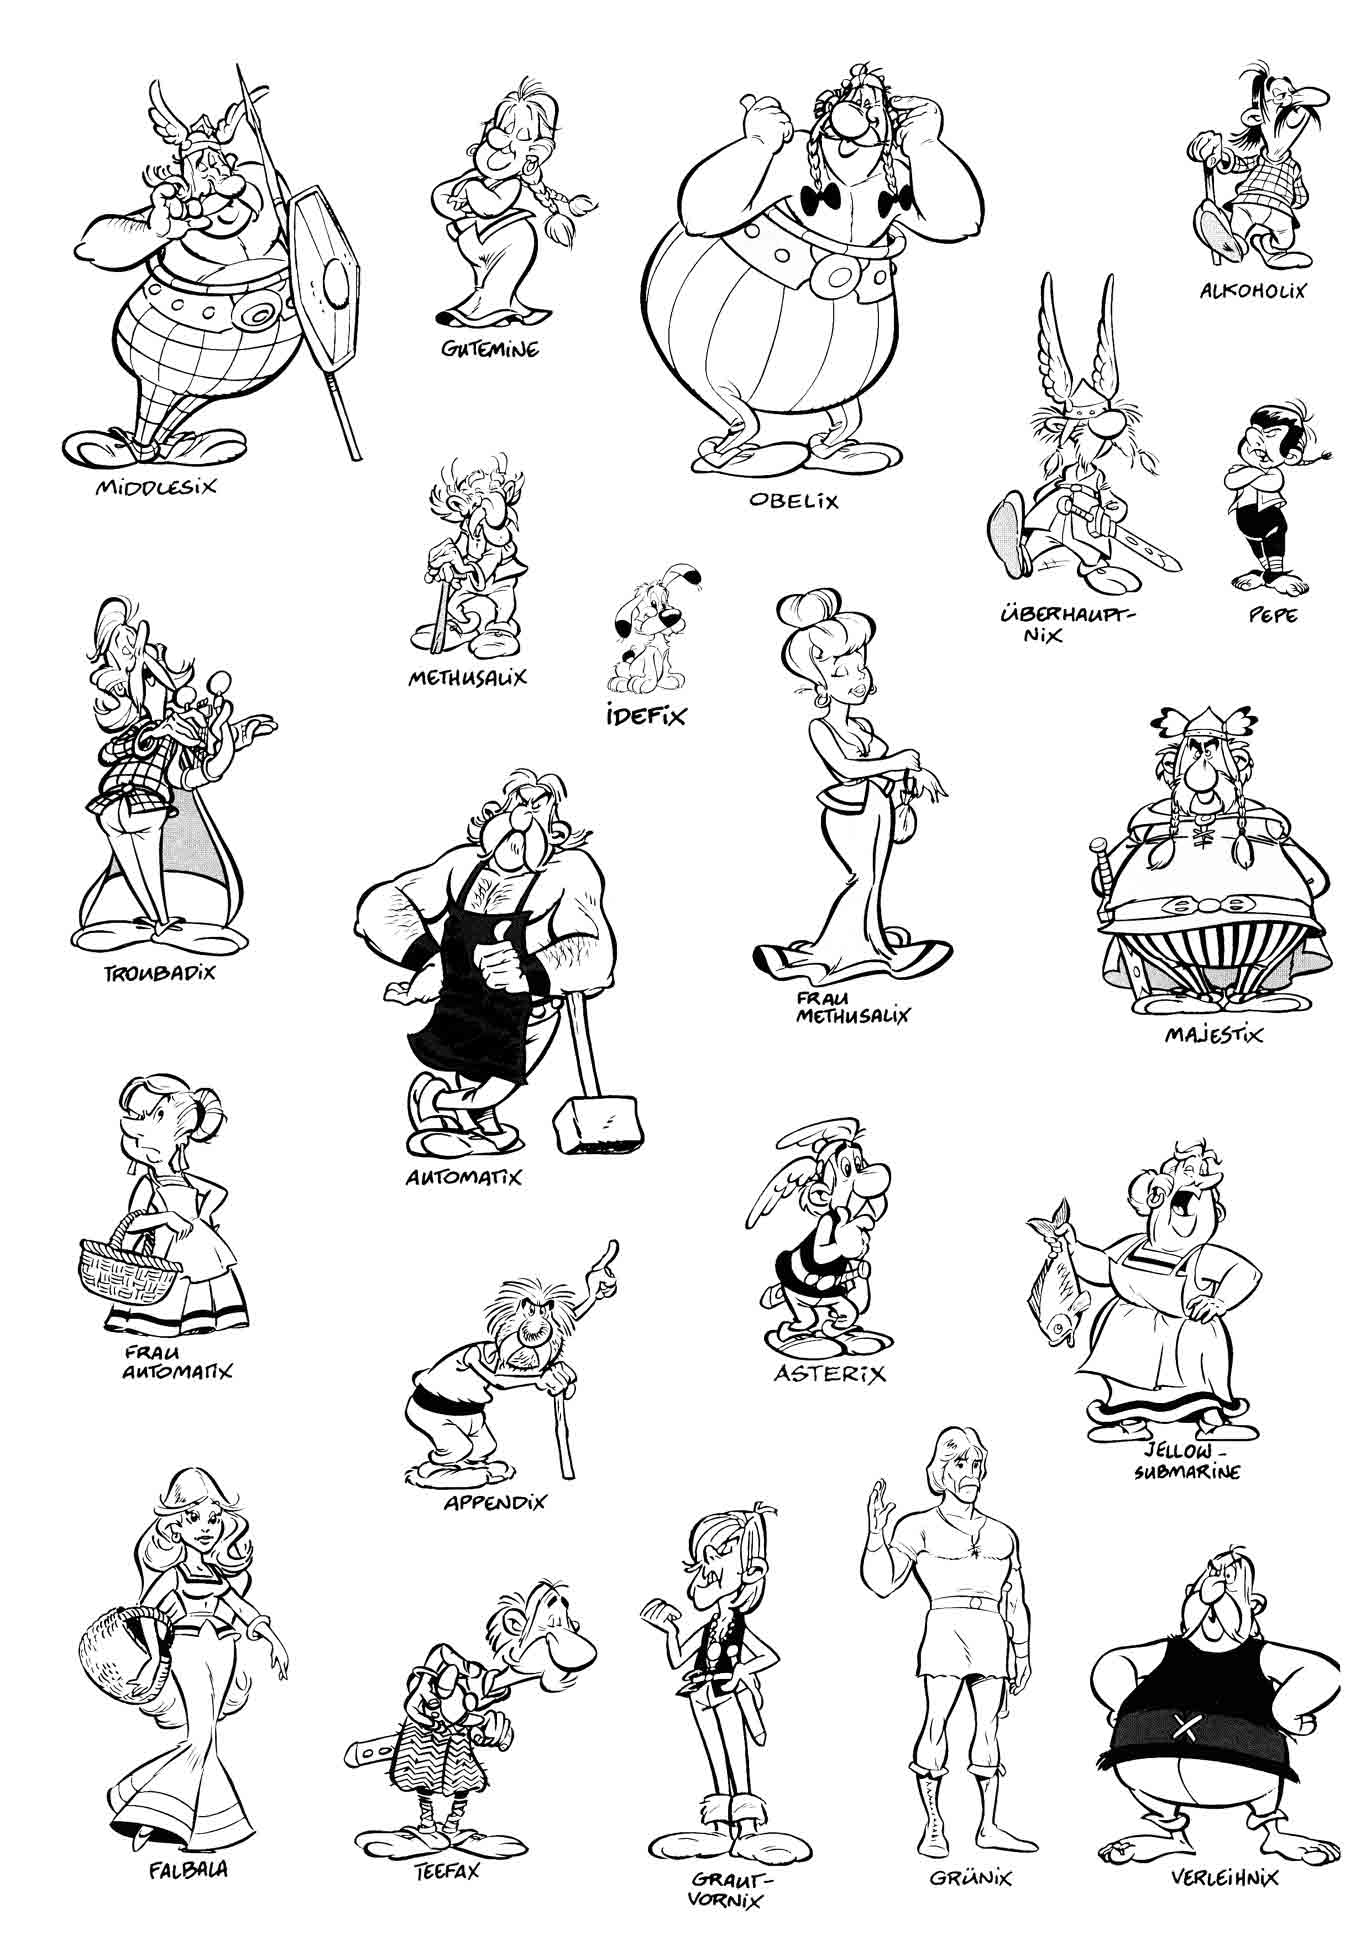 着色页: Asterix 和 Obelix (动画片) #24396 - 免费可打印着色页